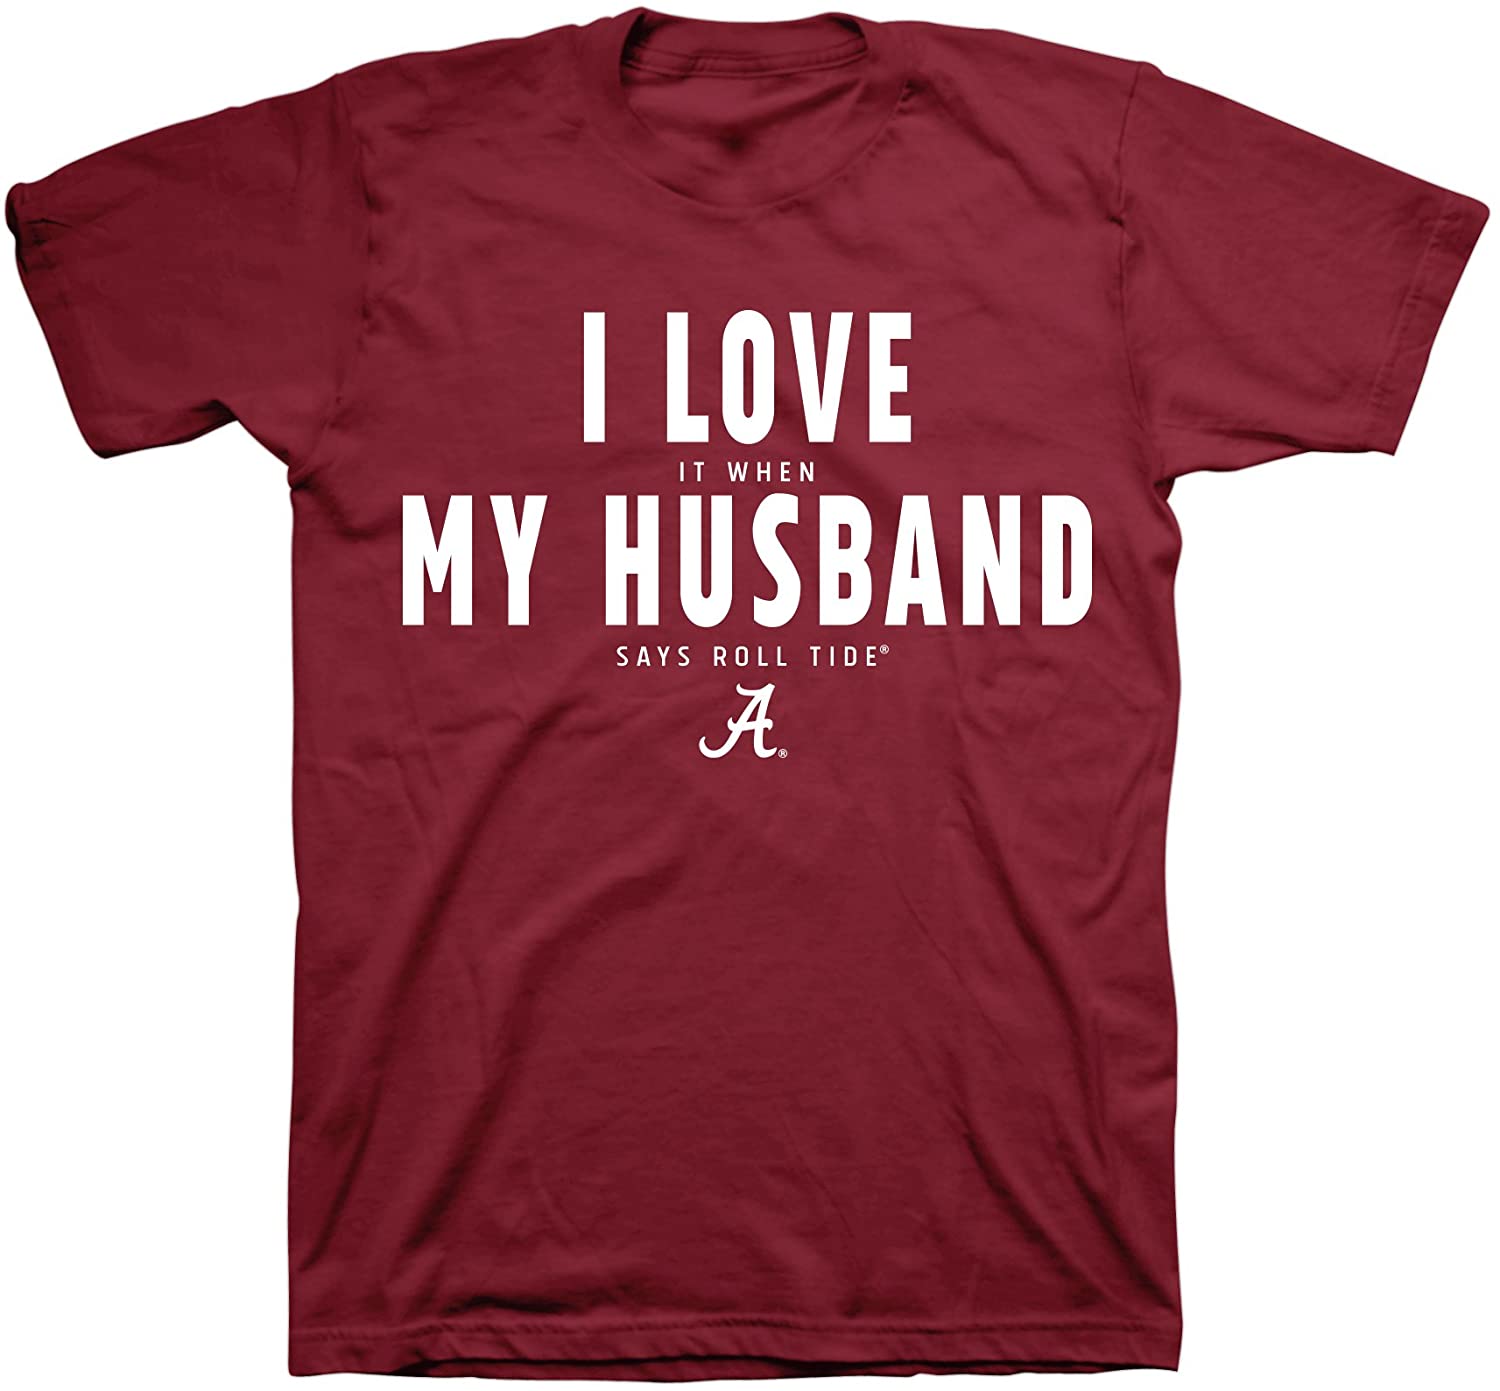 Alabama Crimson Tide T-Shirt - All Conference Apparel - Ladies - I Love It When My Husband Says Roll Tide - Crimson